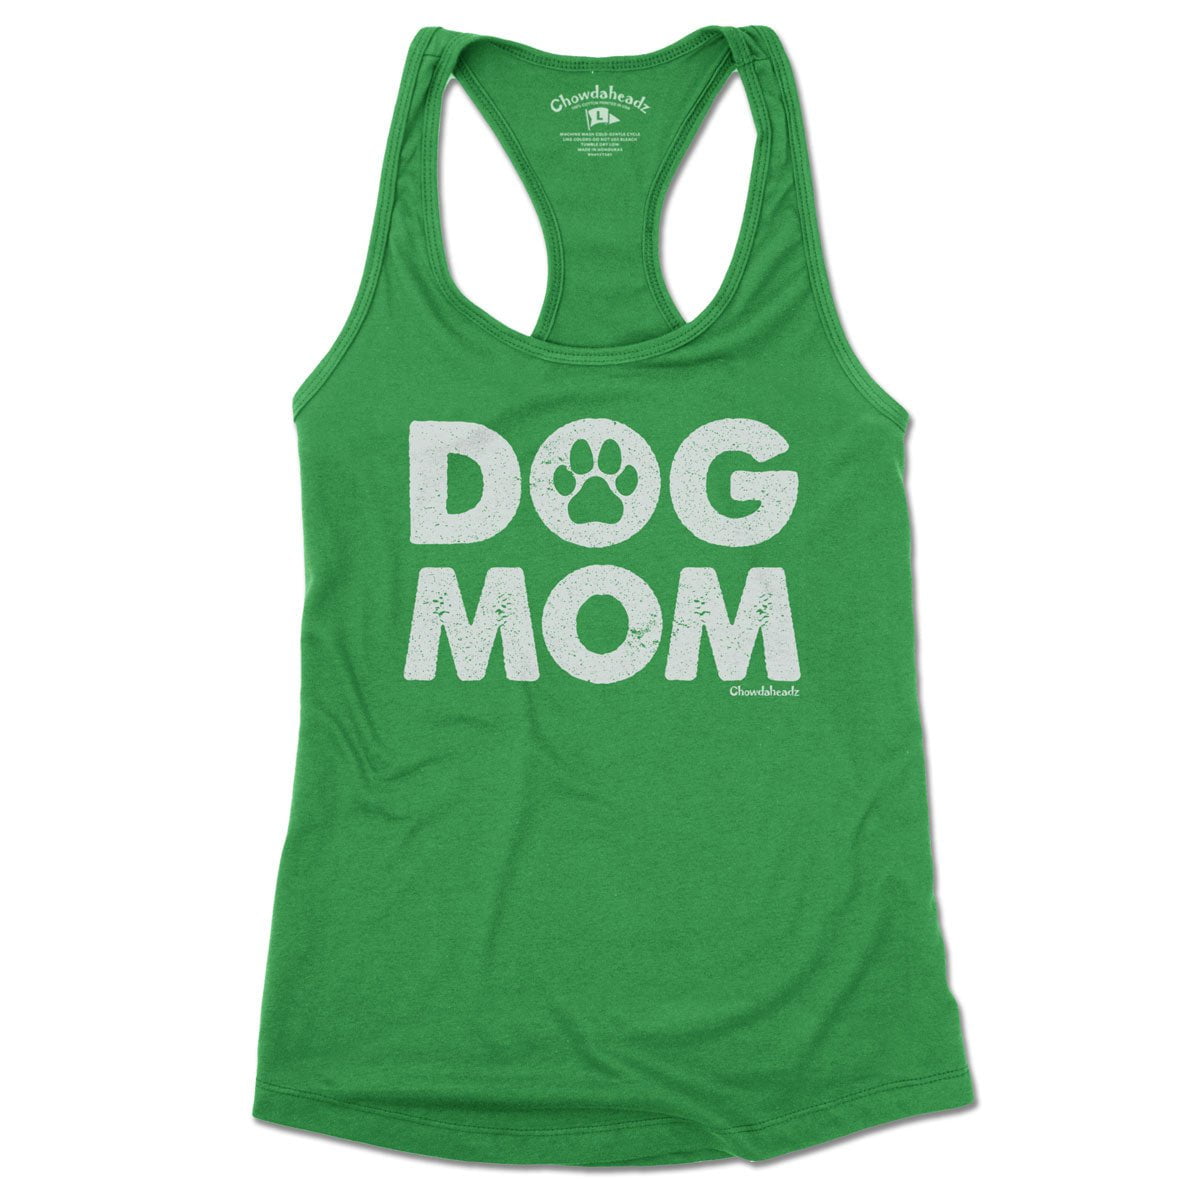 Dog Mom Women's Tank Top (11 Colors) - Chowdaheadz